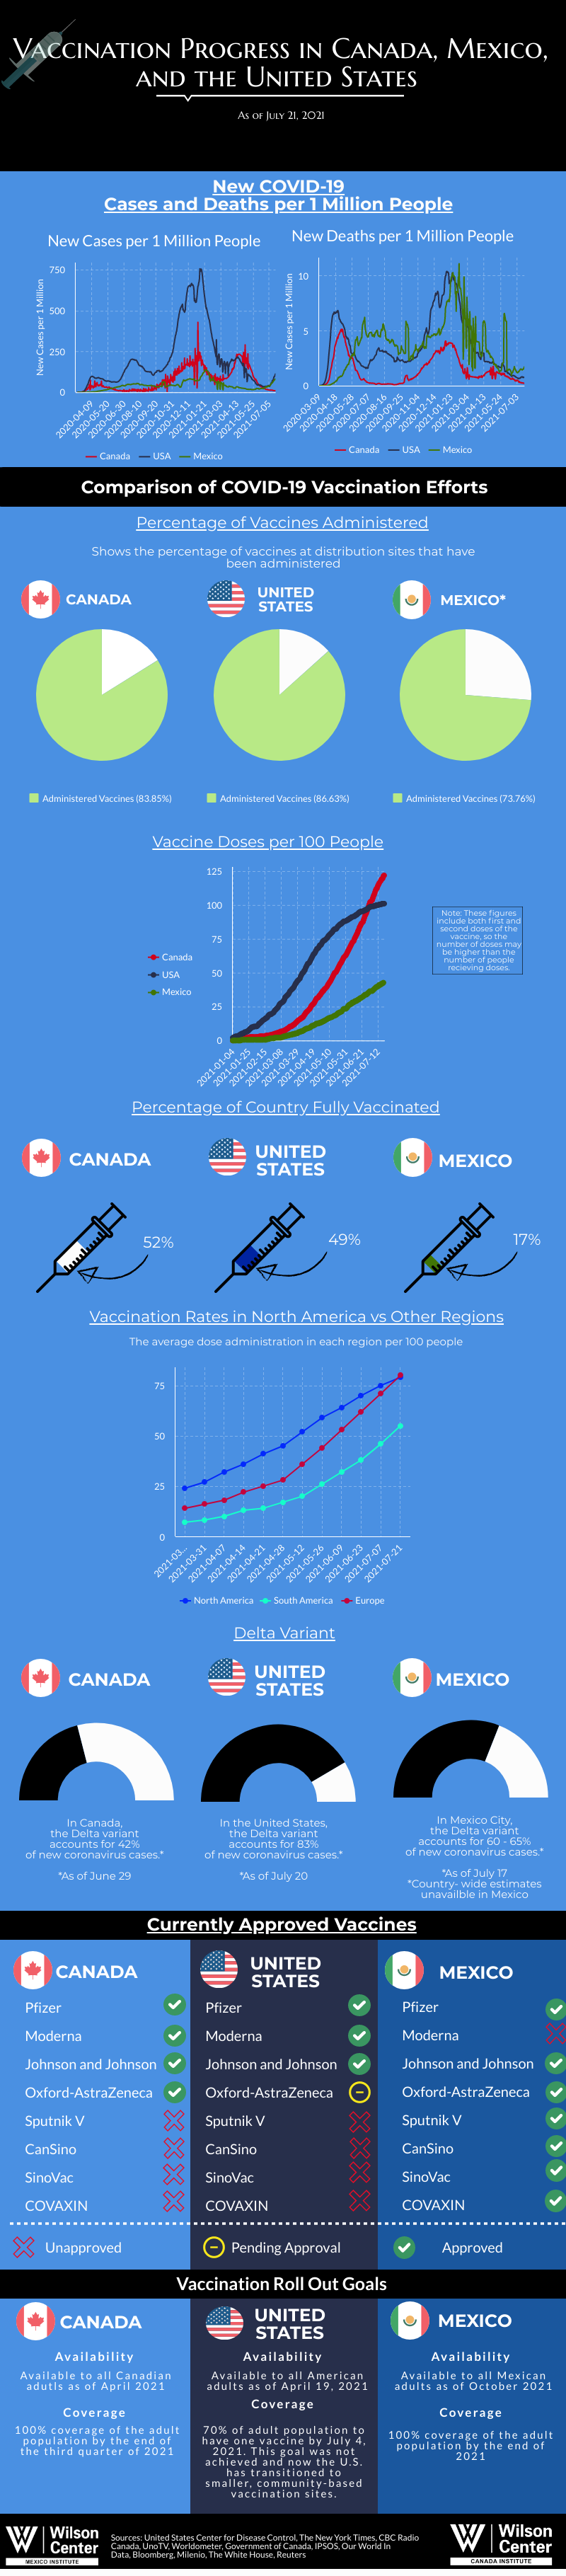 Wilson Center Vaccine Infographic Update 7.21.21 - Vaccination Progress in North America